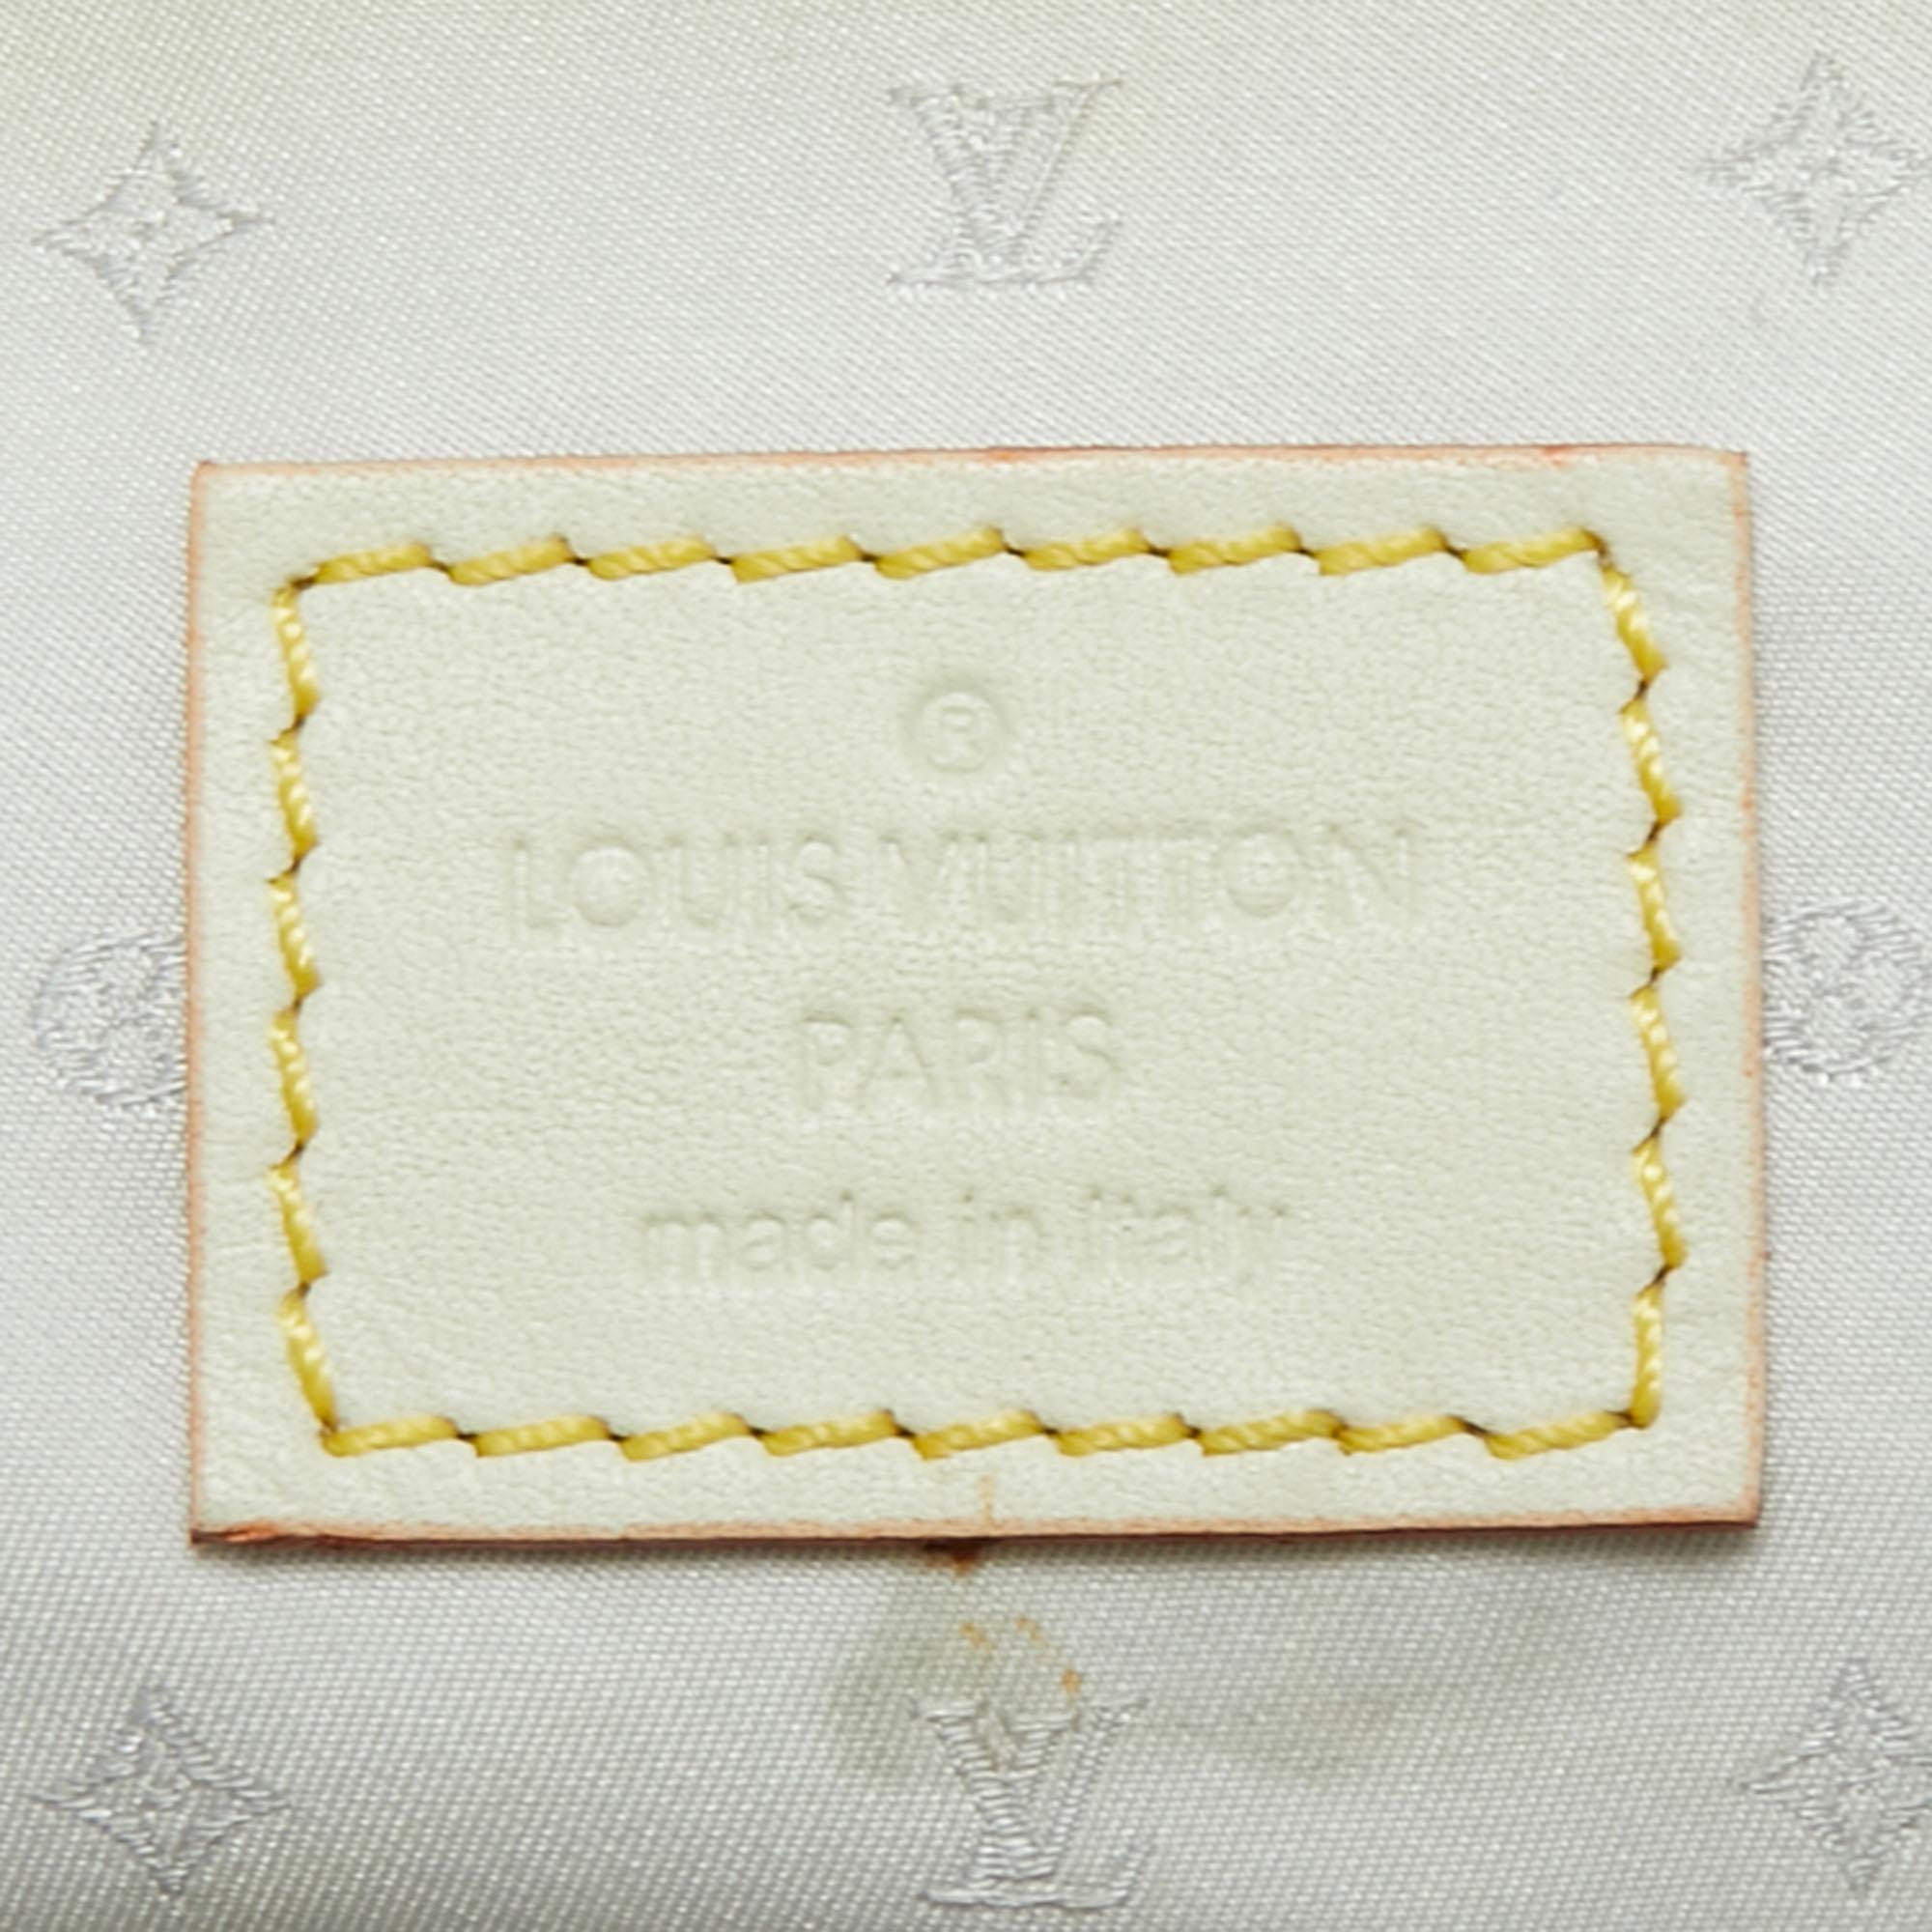 Louis Vuitton Off White Suhali Leather Lingenieux PM Bag 3